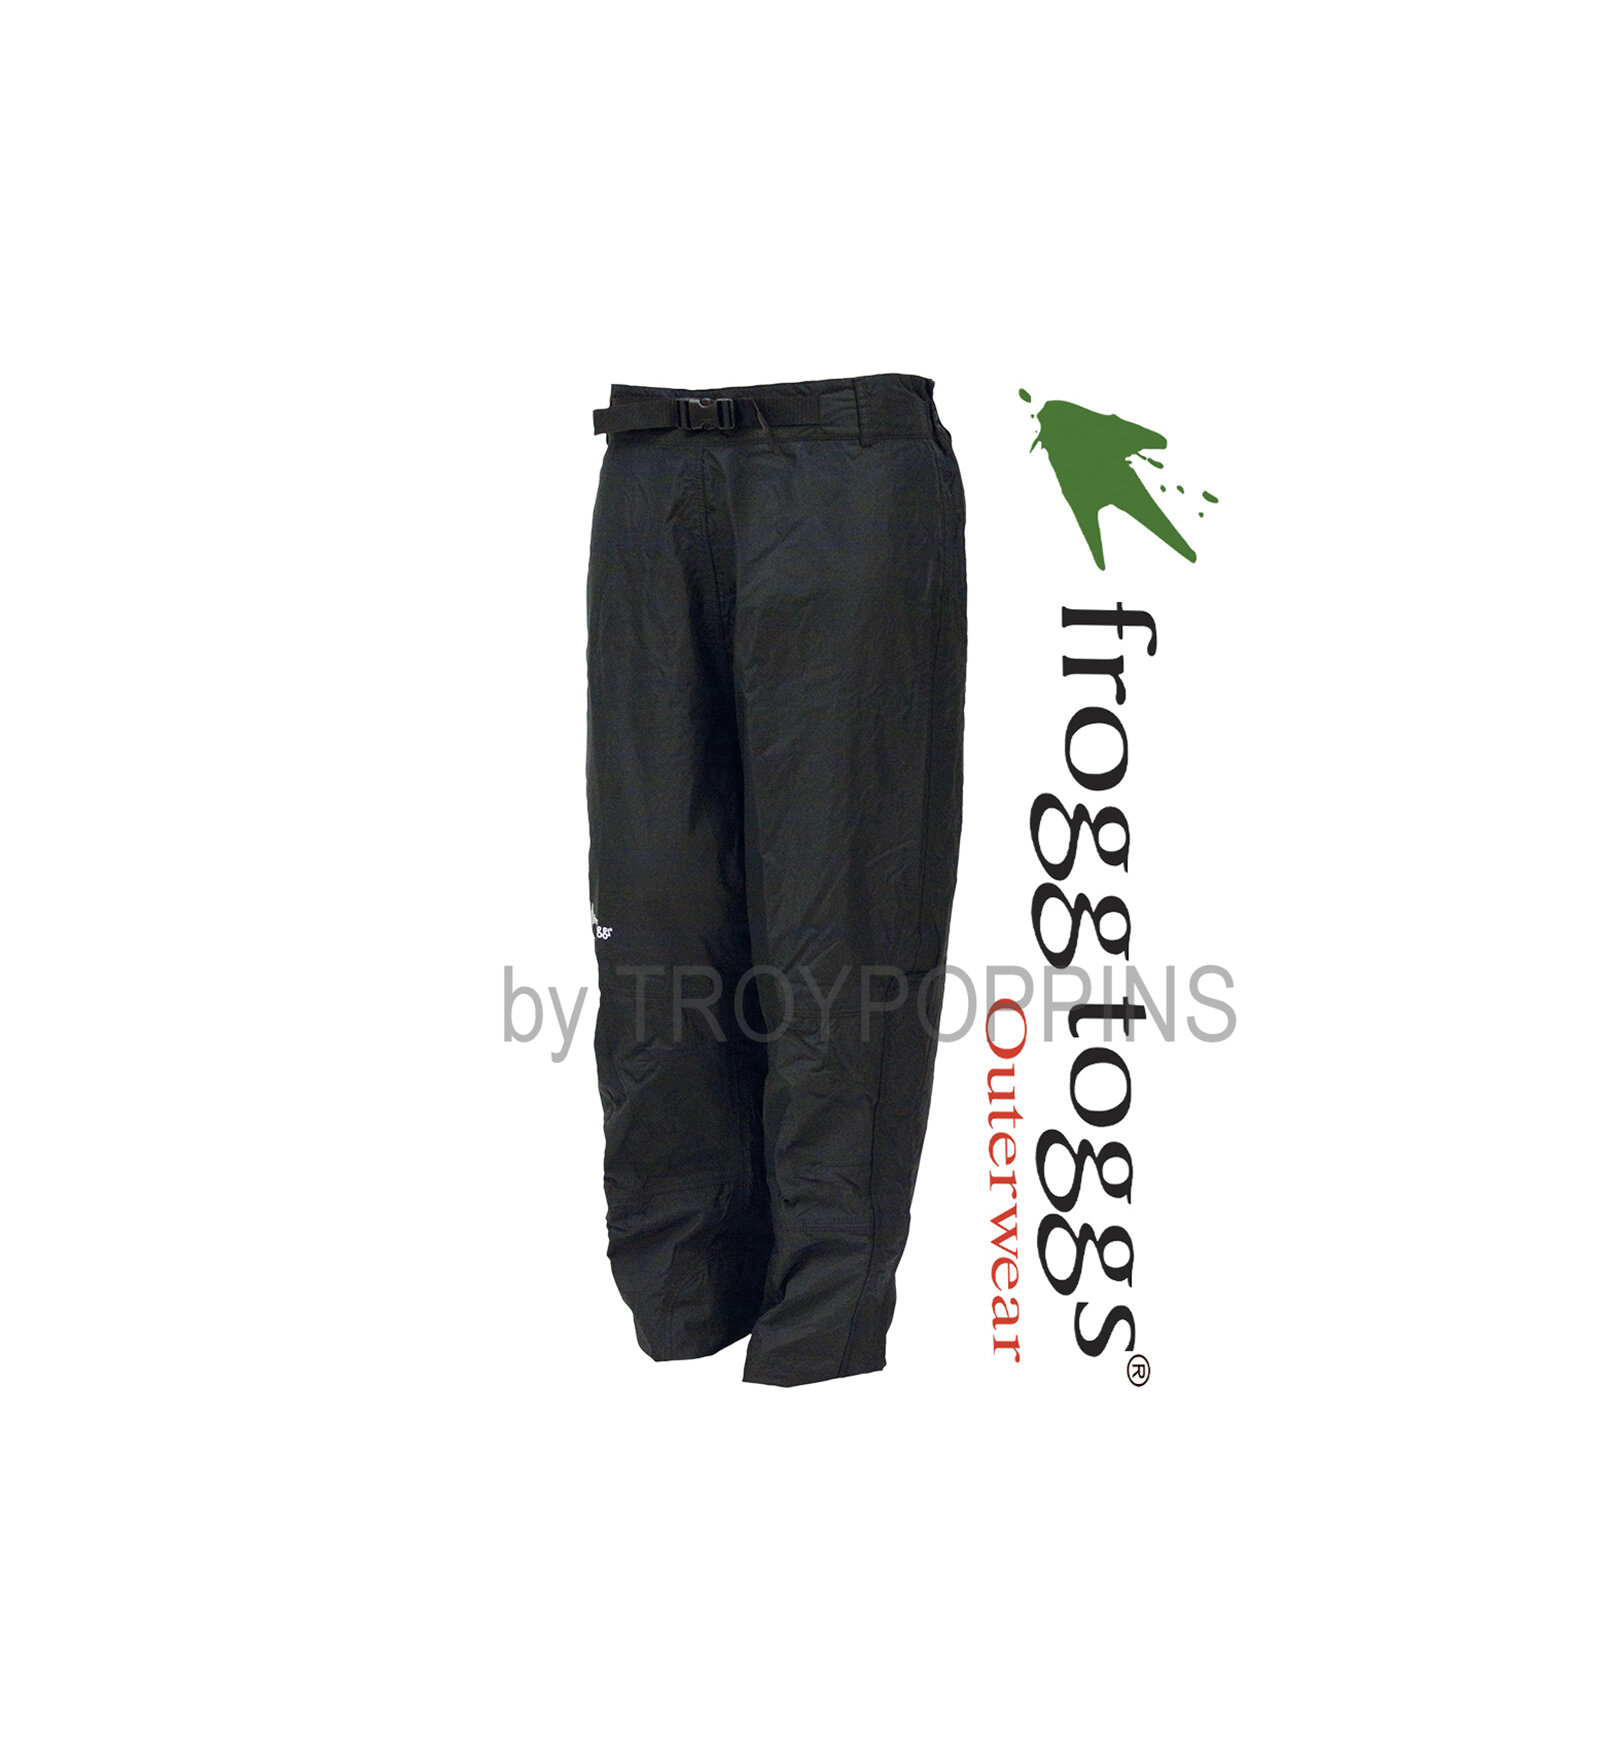 Frogg Toggs Horny Toadz Hi-Vis Rain Jacket NTH65115-48 Sizes L & 2XL CHOOSE SIZE 